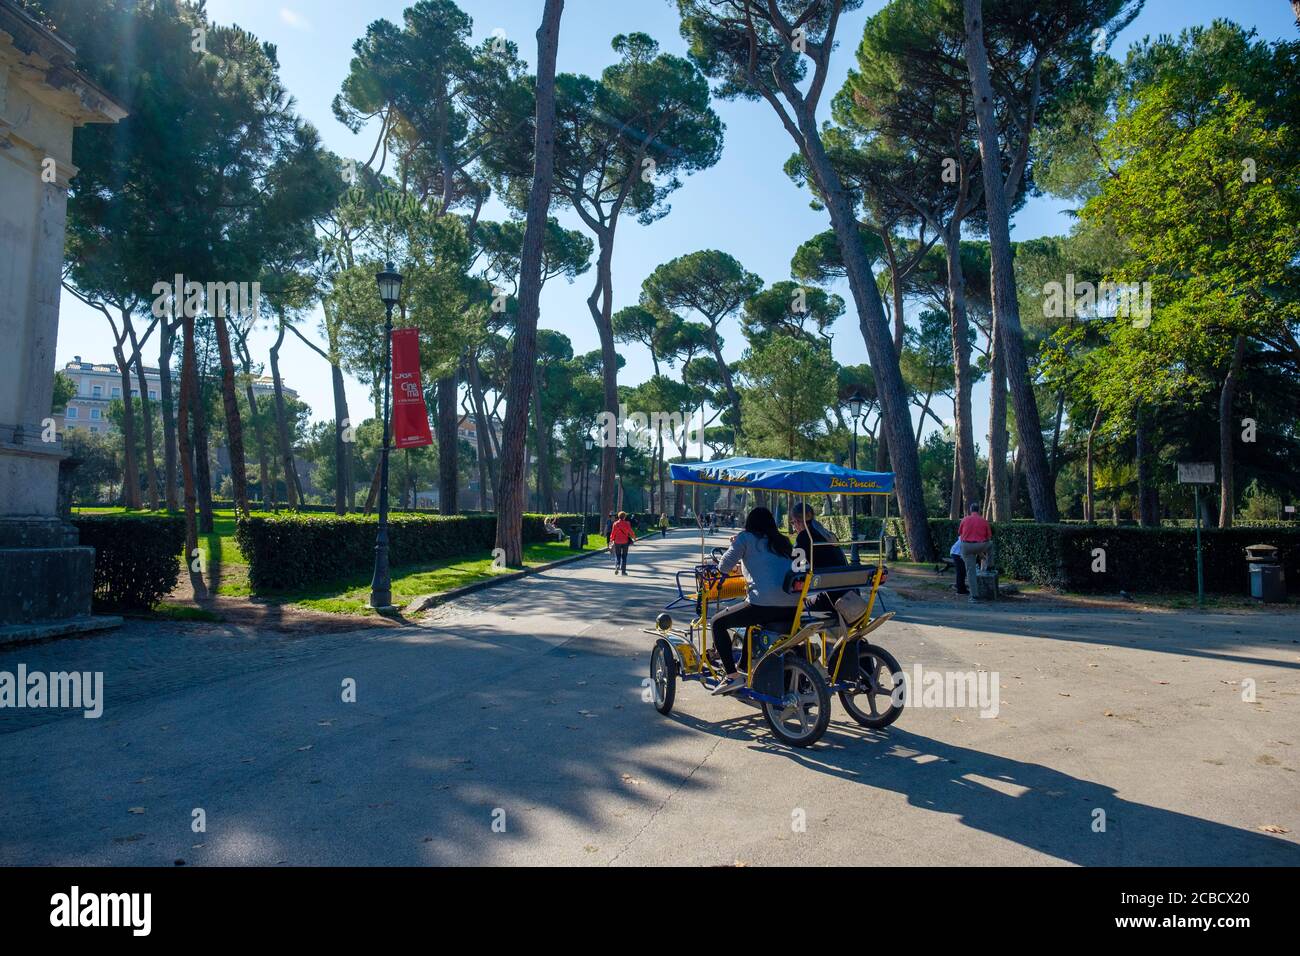 People enjoying a Summer day riding a Bici Pincio Rent a Bike rental quadricycle, Villa Borghese Park, Rome, Italy Stock Photo